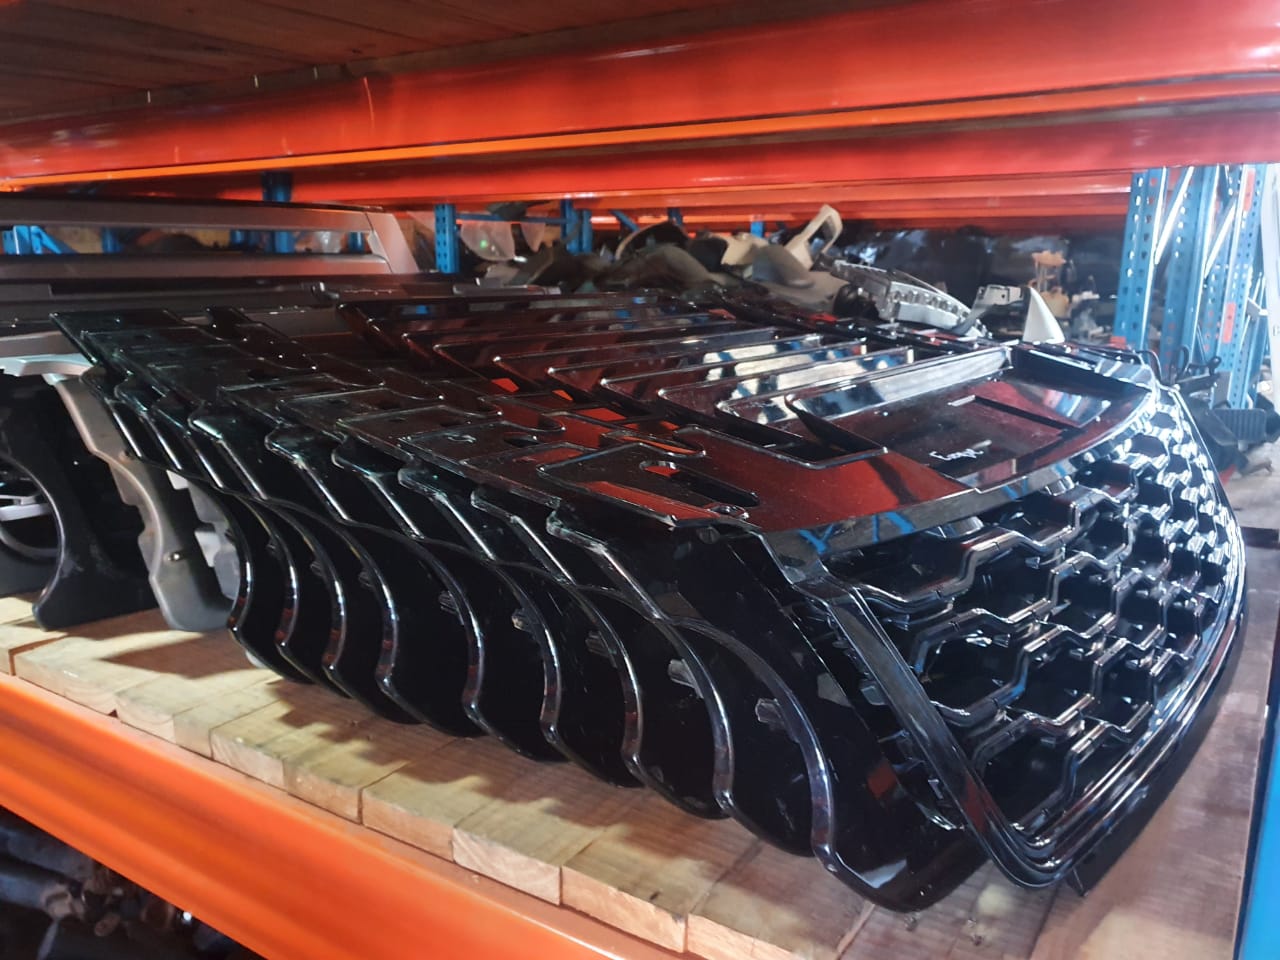 AUTO EZI | Land Rover Used Spares & Parts 